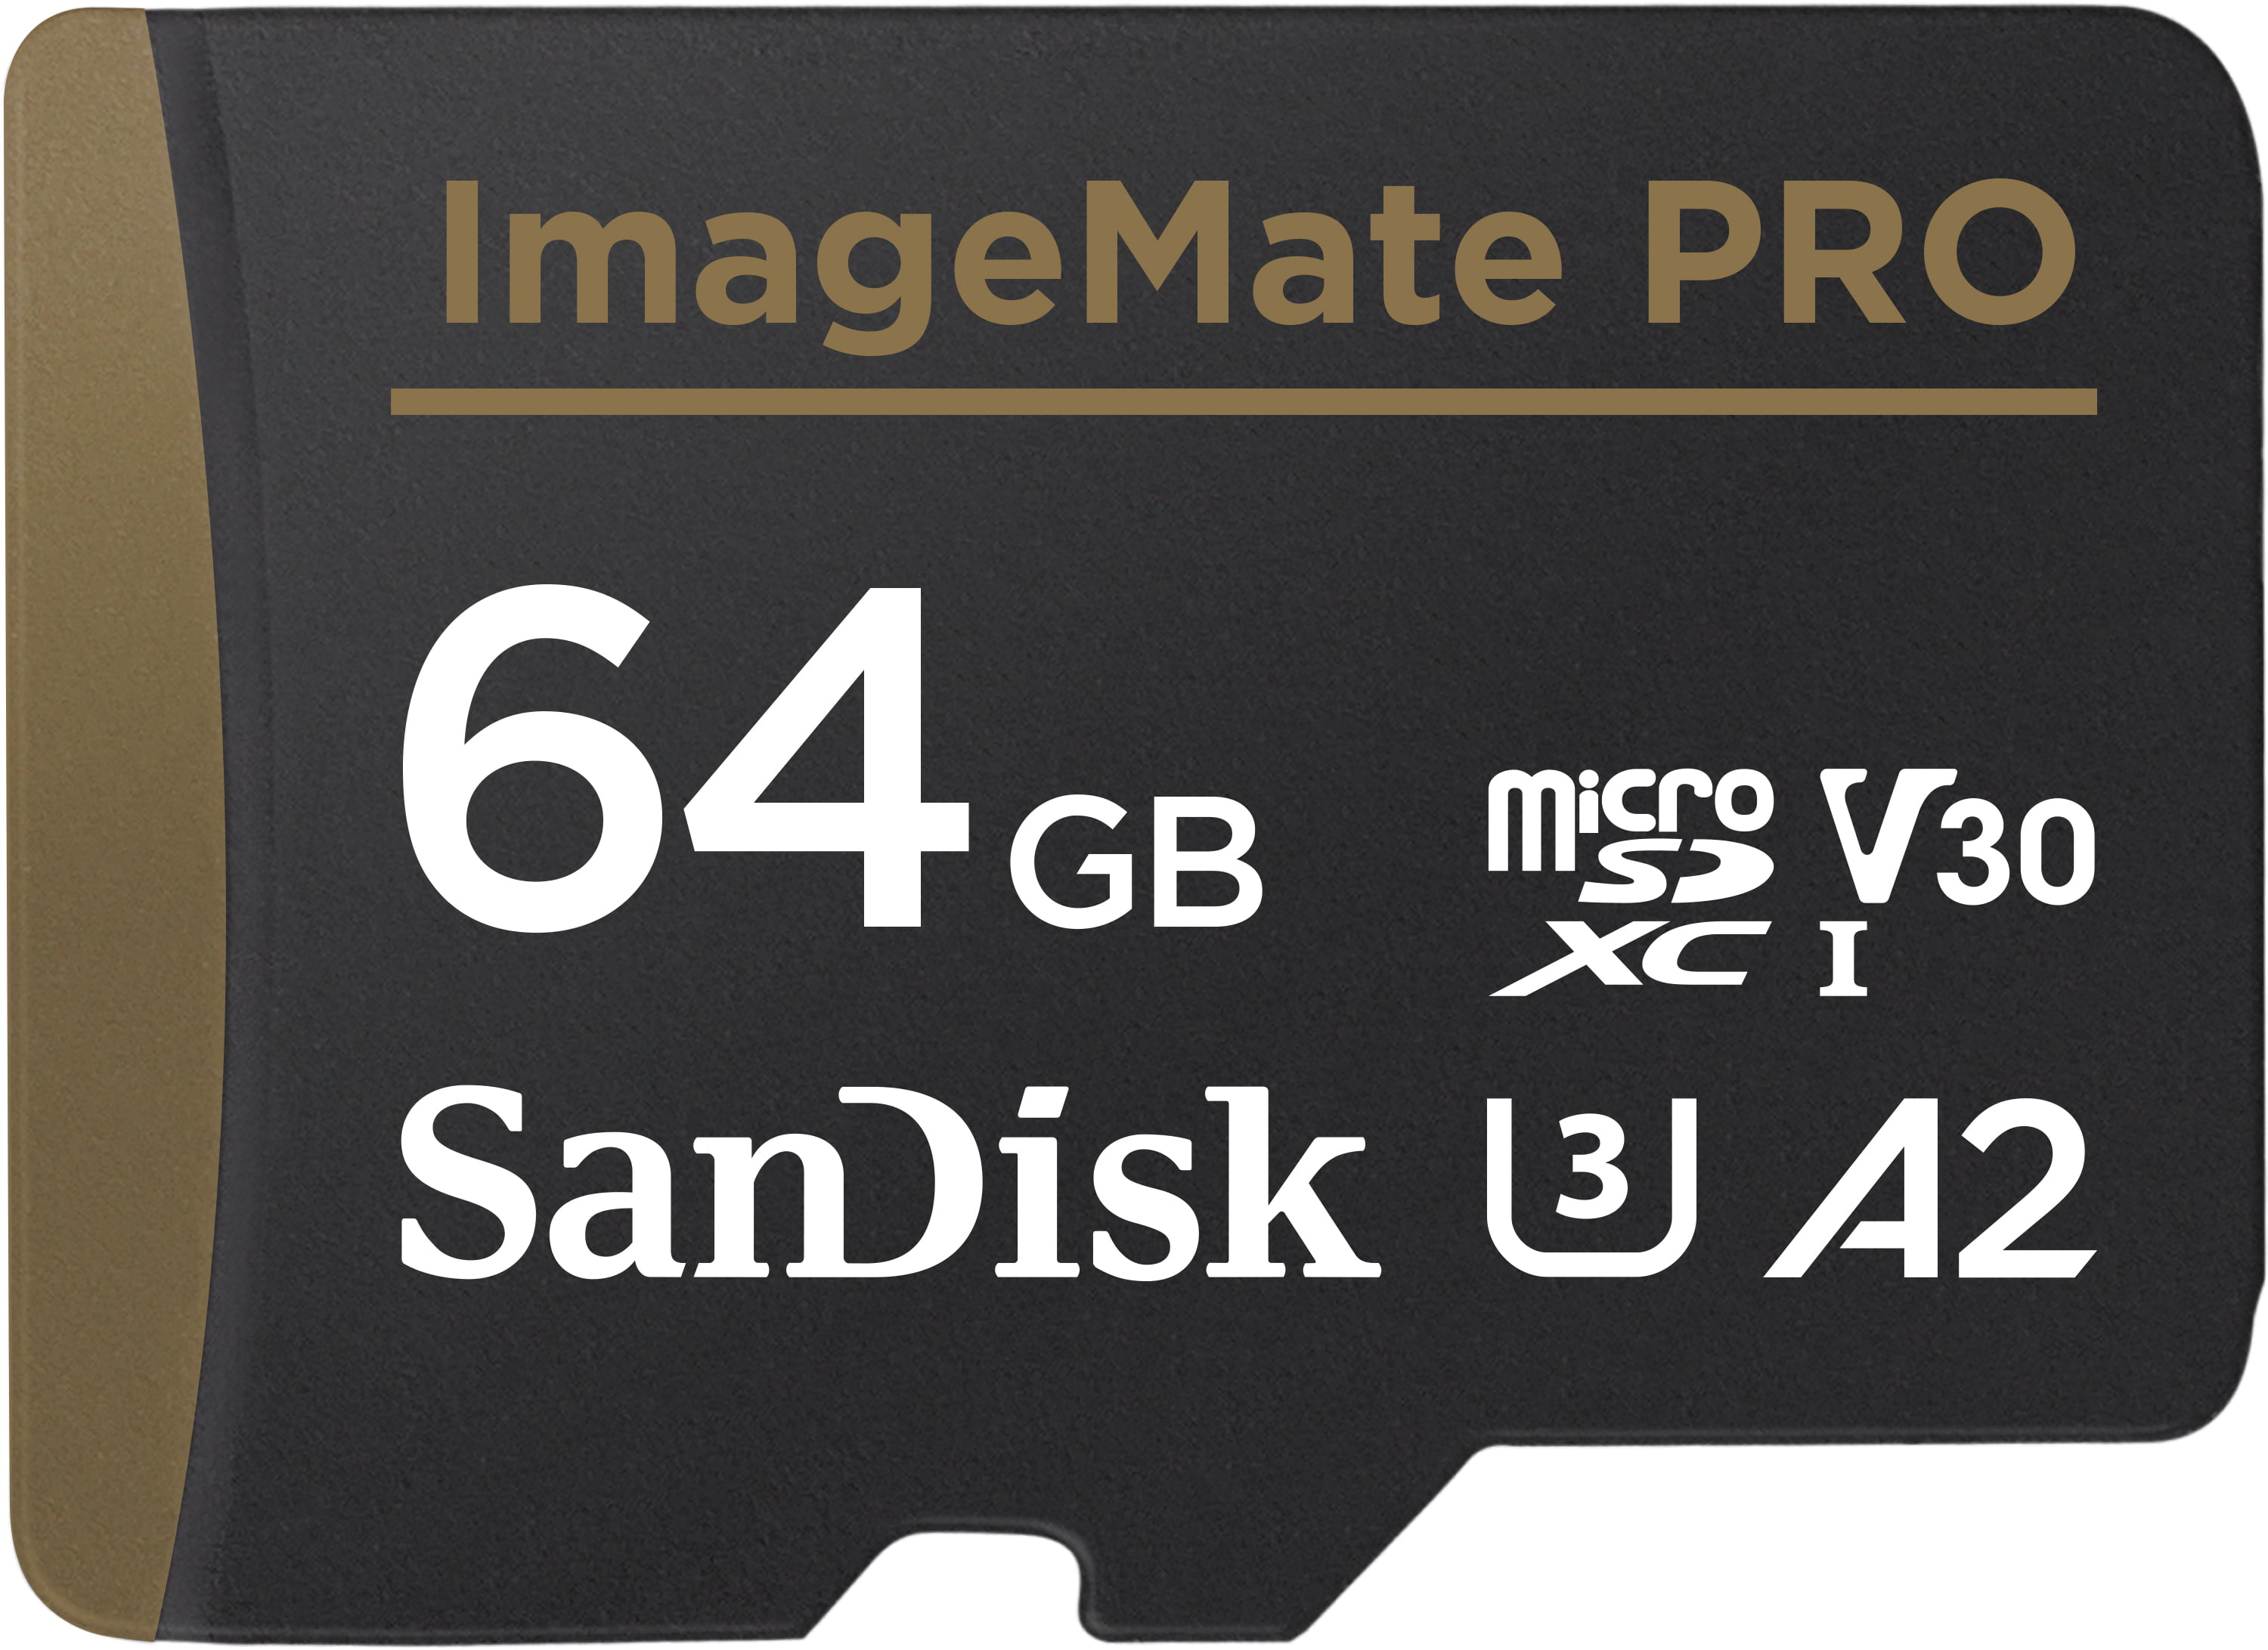 Sandisk 64gb Imagemate Pro Microsdxc Uhs 1 Memory Card With Adapter For Action Cams C10 U3 V30 4k Uhd Micro Sd Card Sdsqxbz 064g Aw6ja Walmart Com Walmart Com